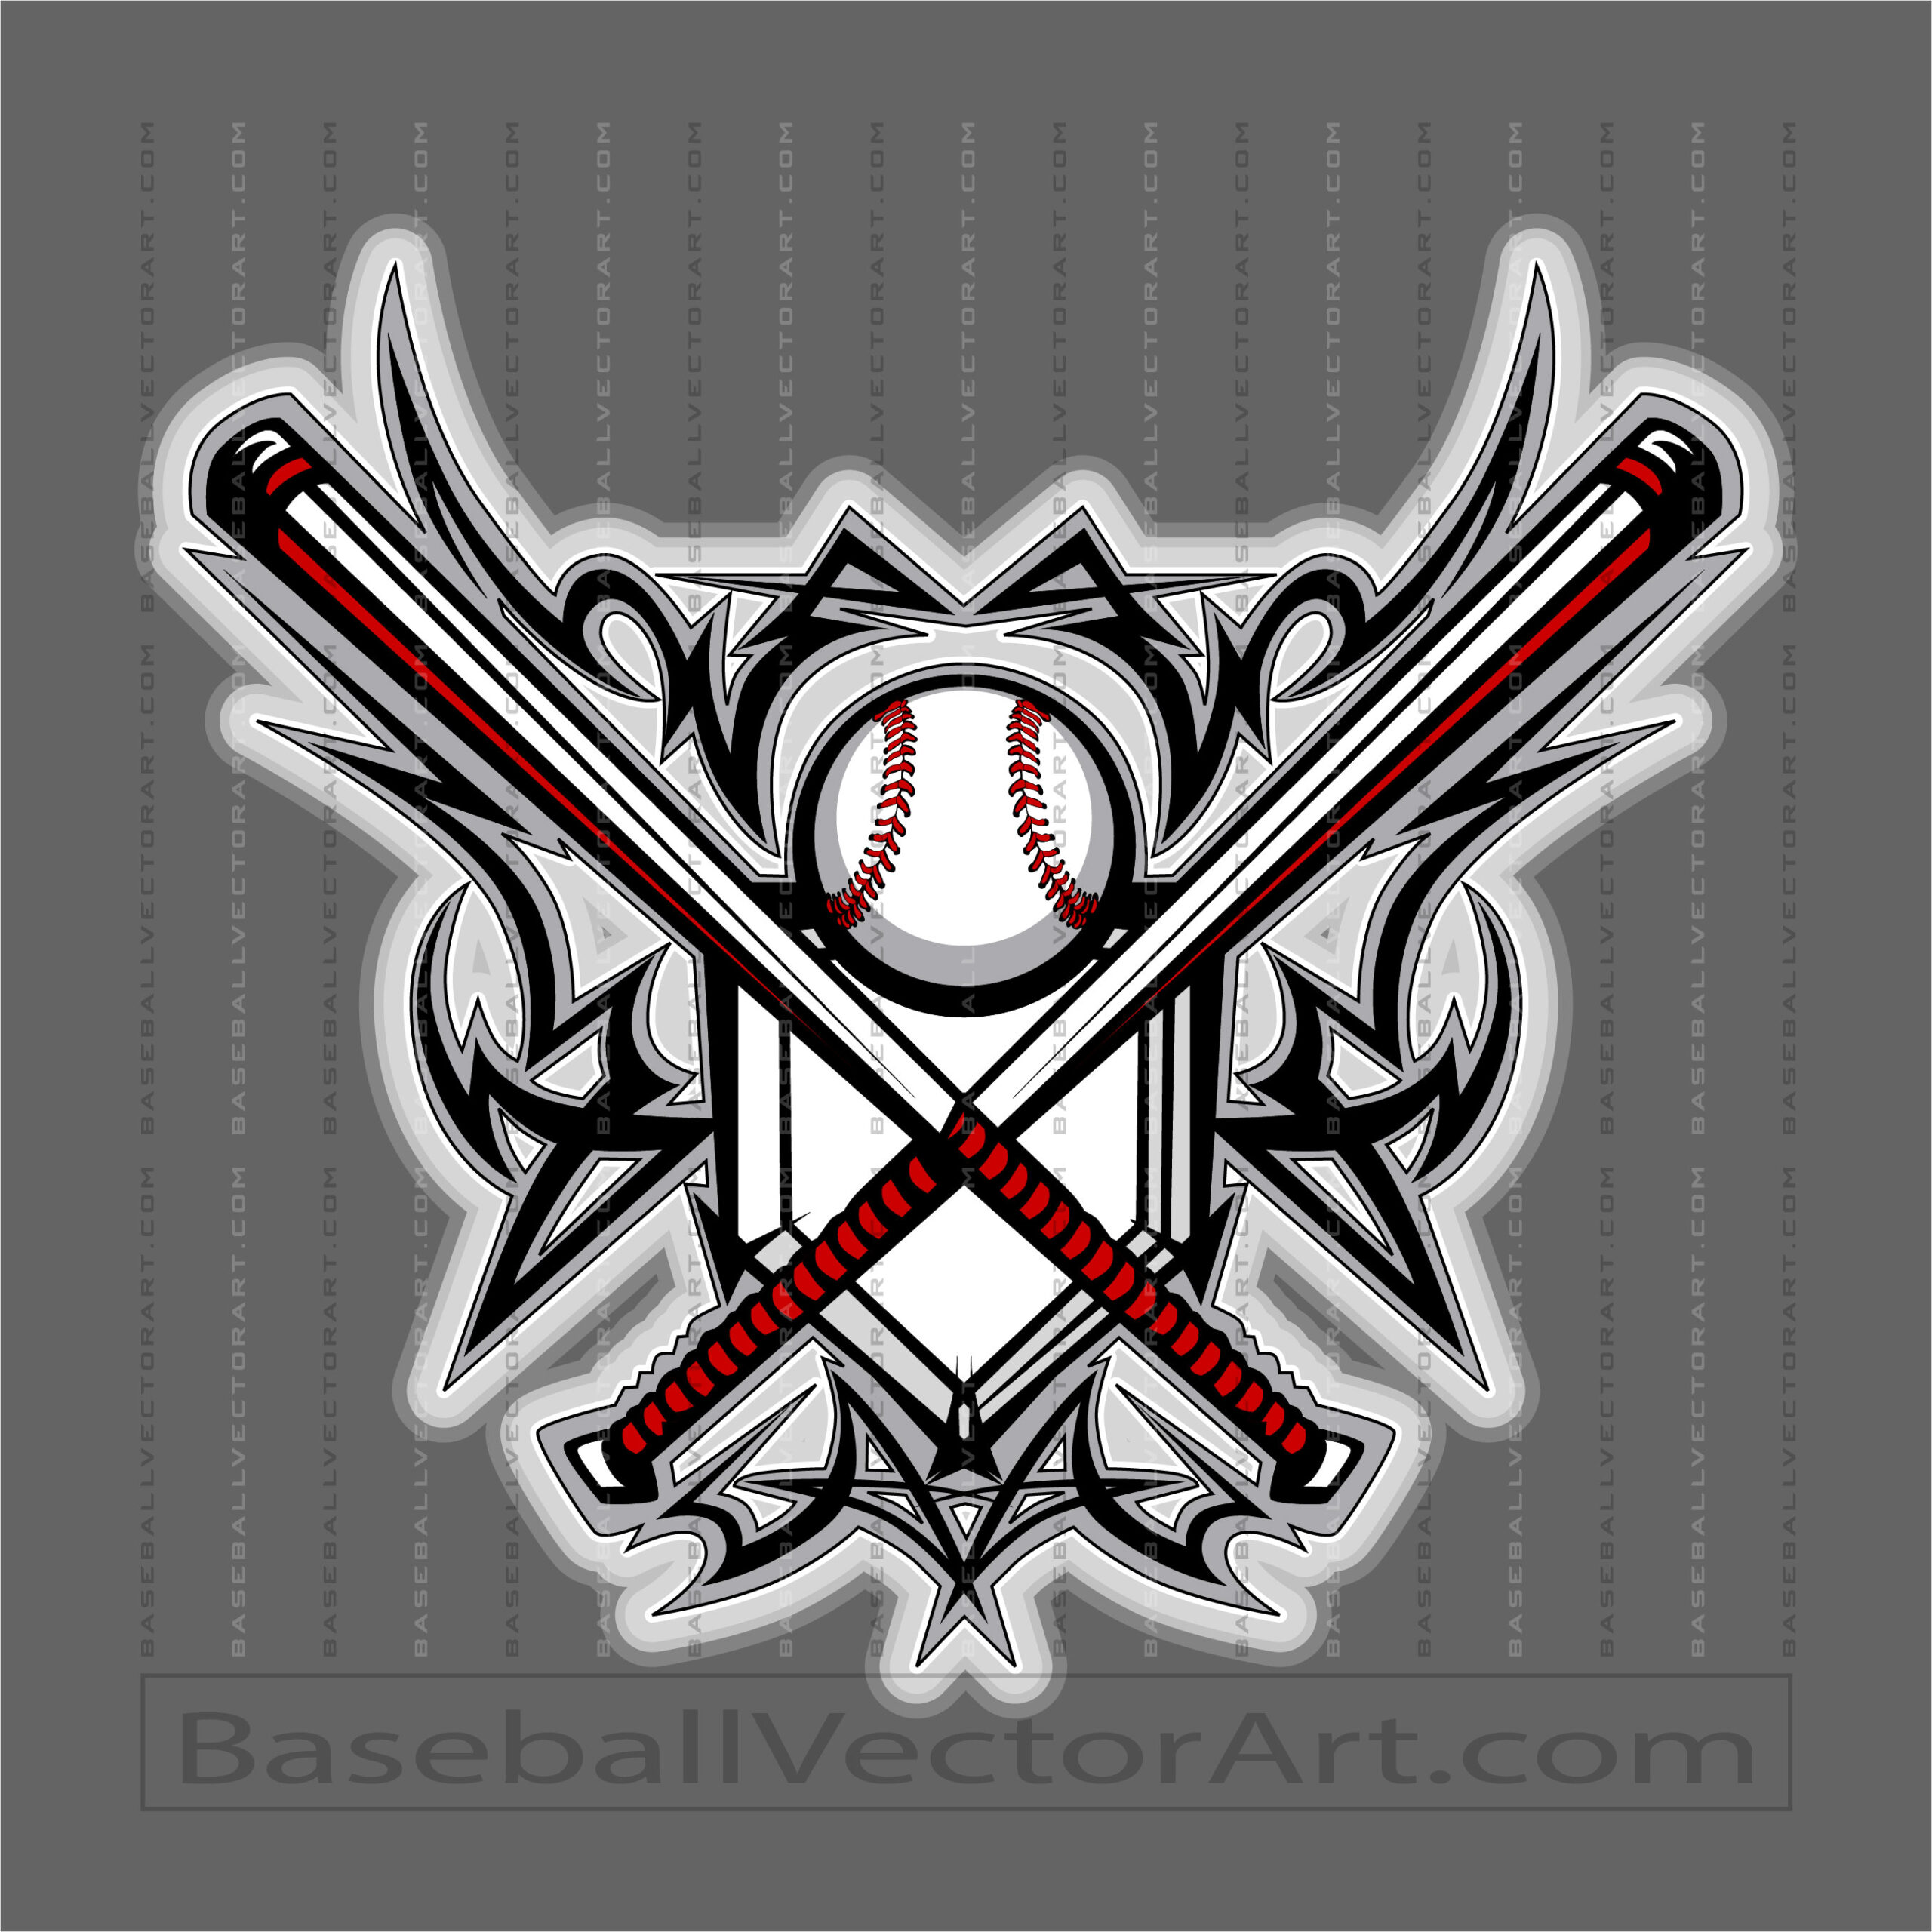 Baseball Plate Vector Art